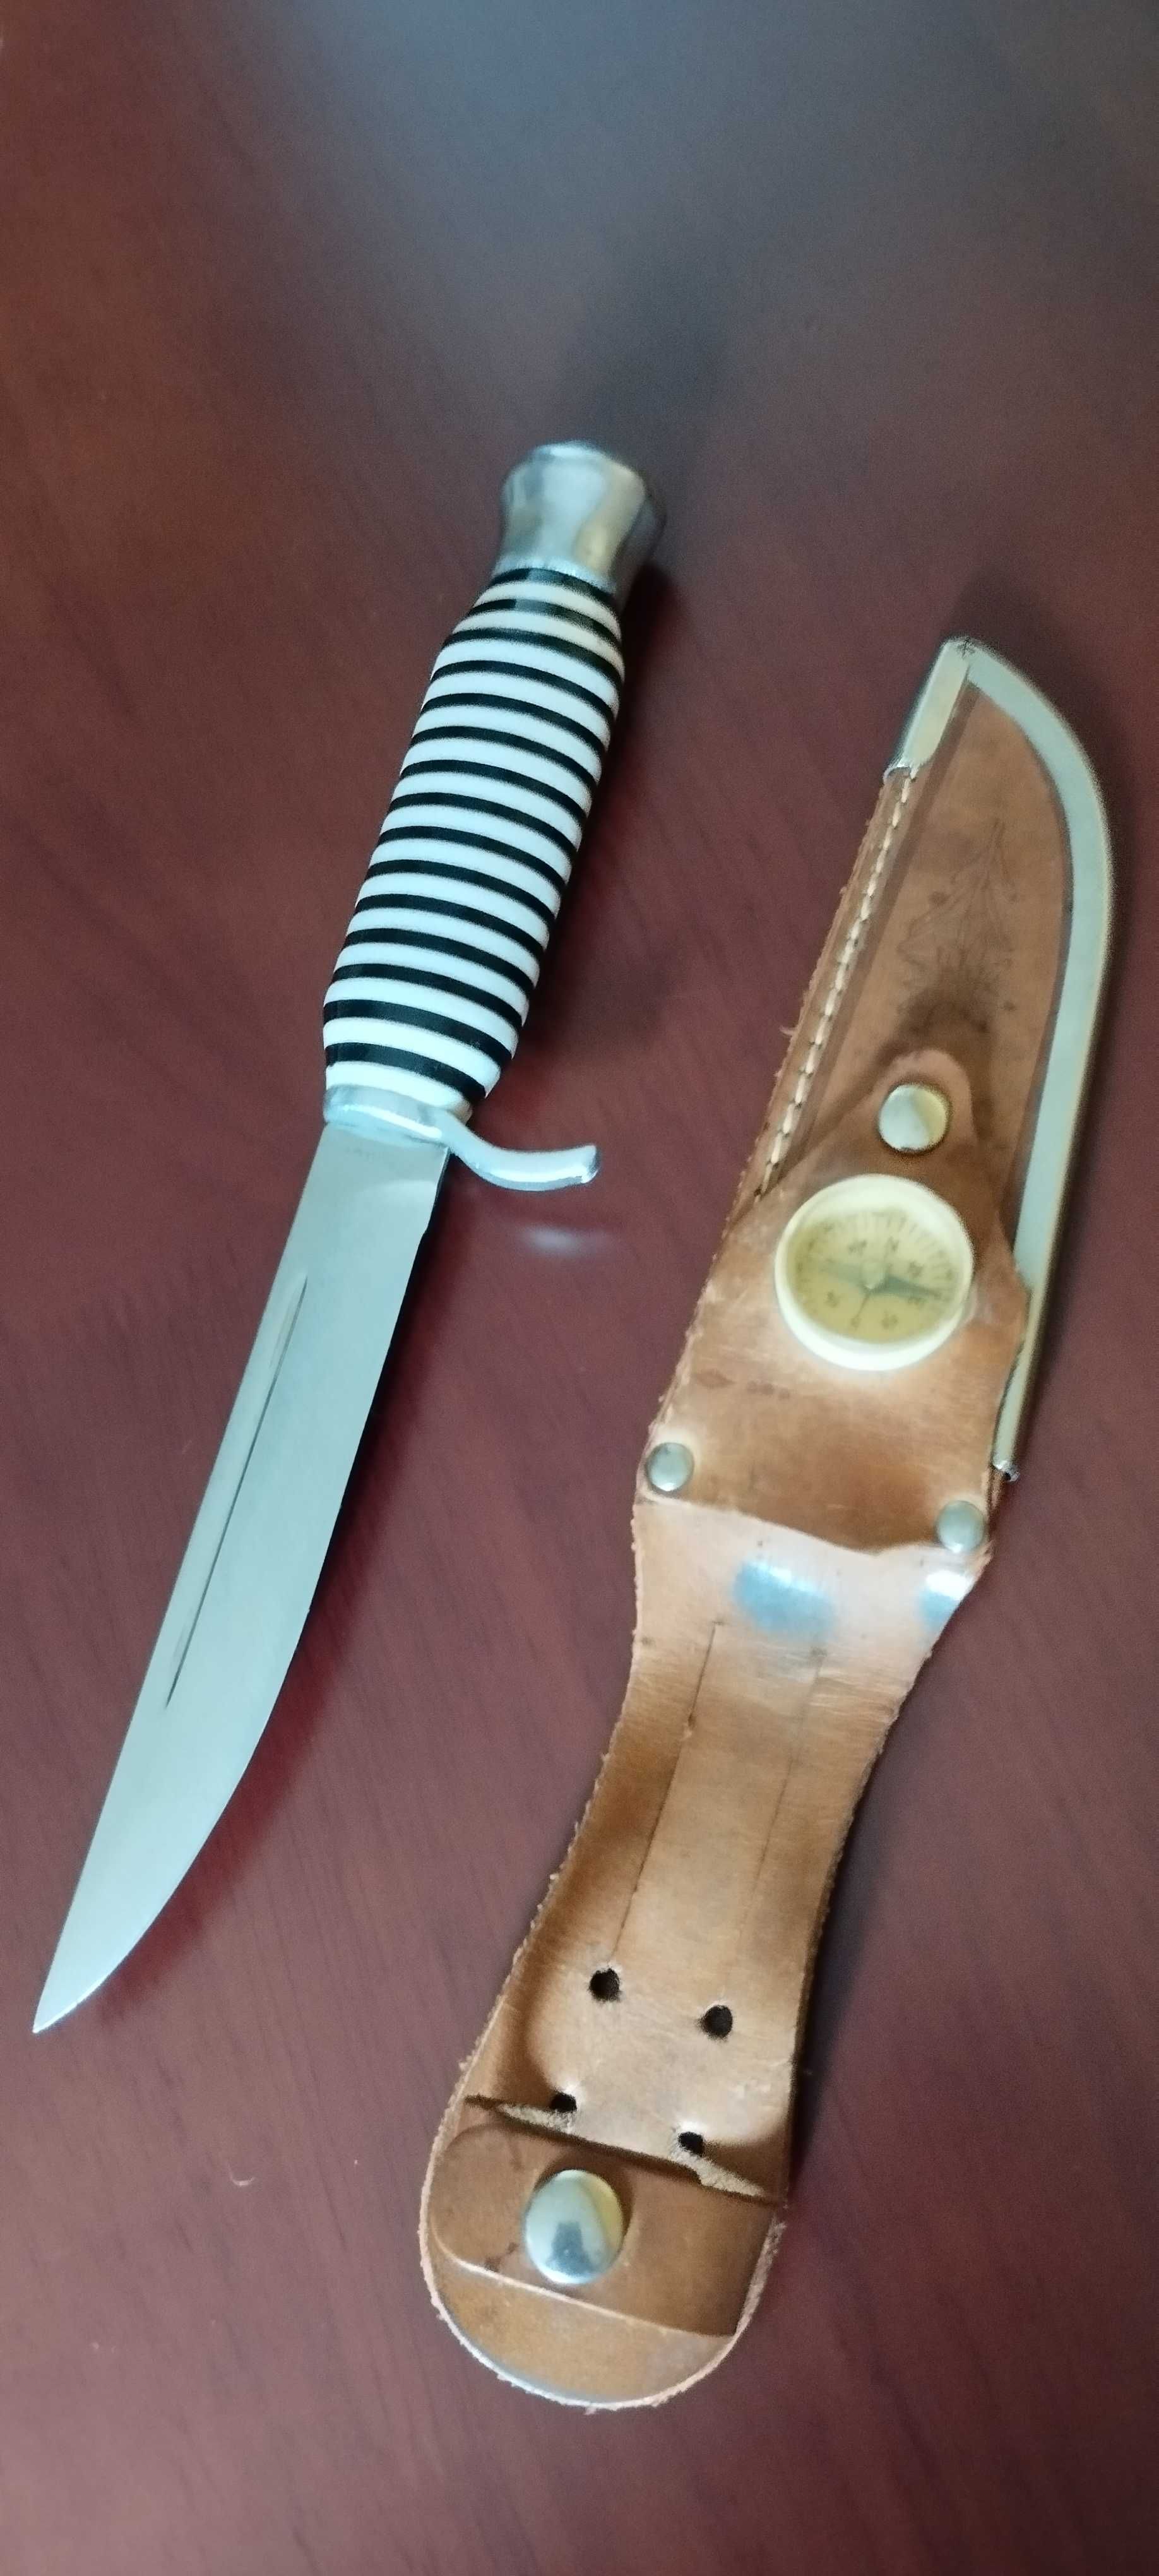 Нож финка с чехлом